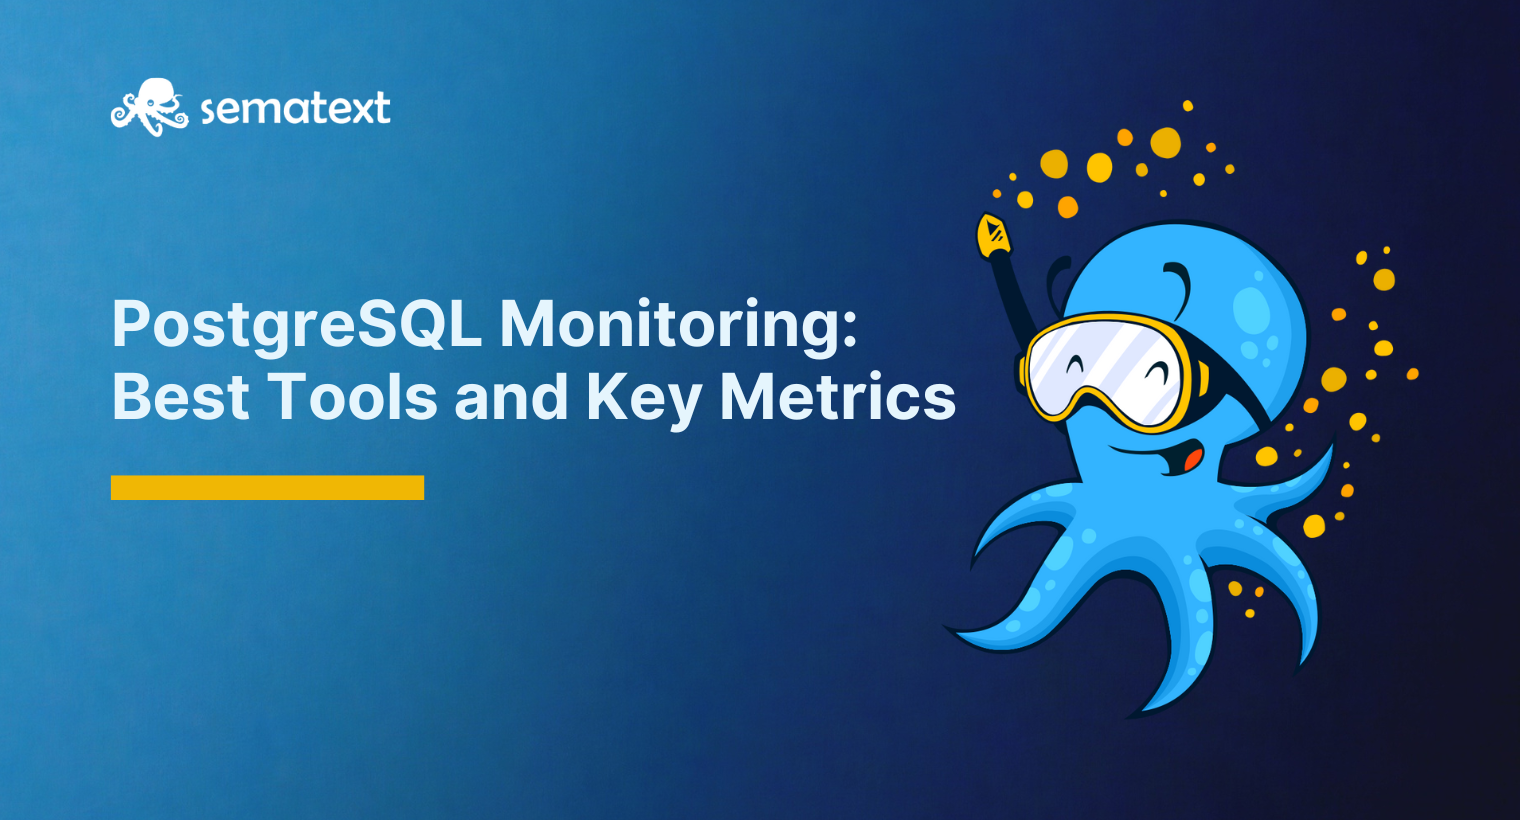 PostgreSQL Monitoring: The Best Tools and Key Metrics to Help Improve Database Performance